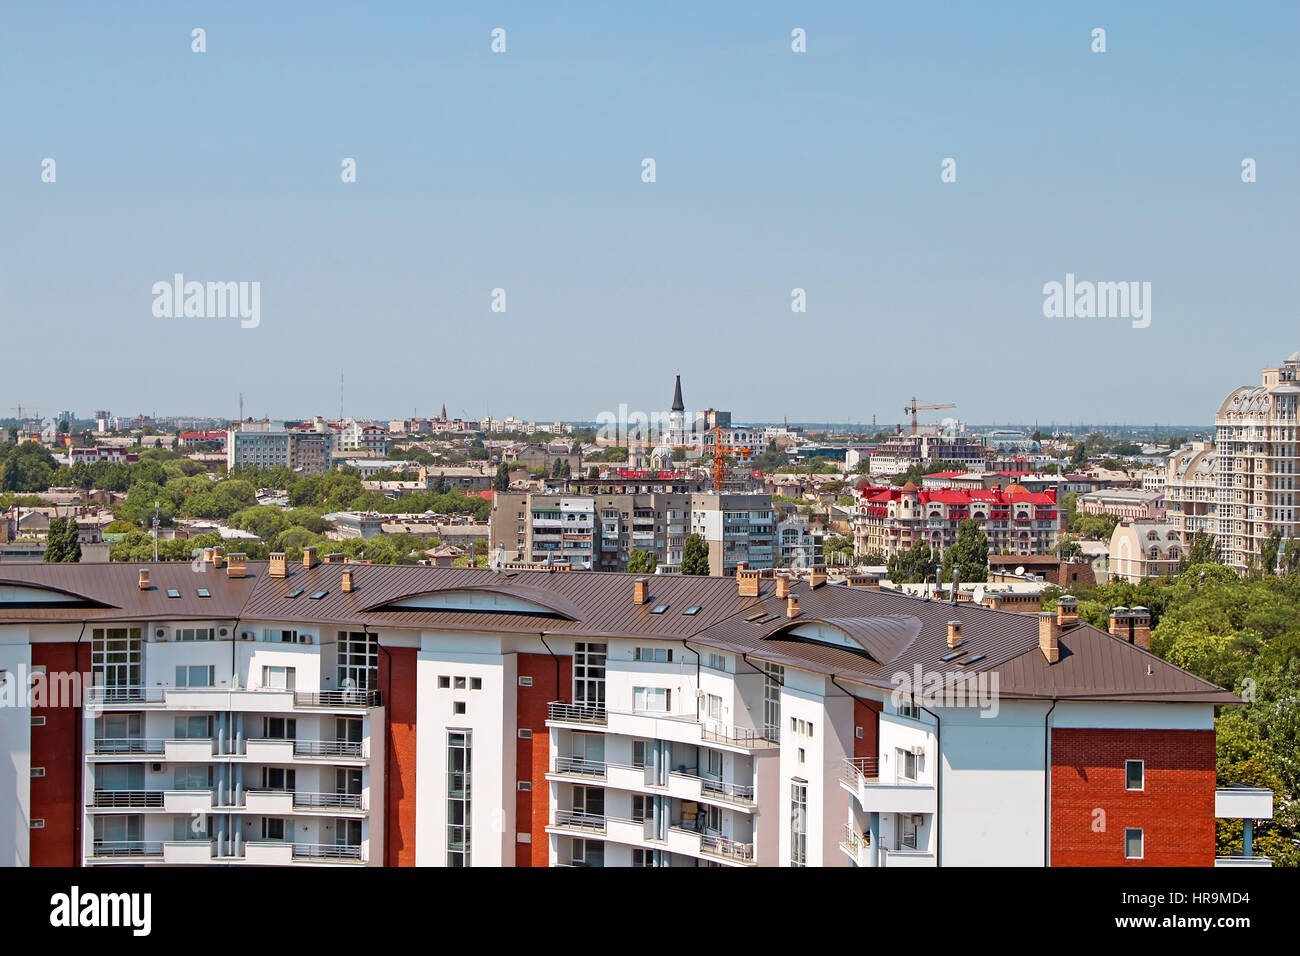 Nice view of Odesa, port city in Ukraine Stock Photo